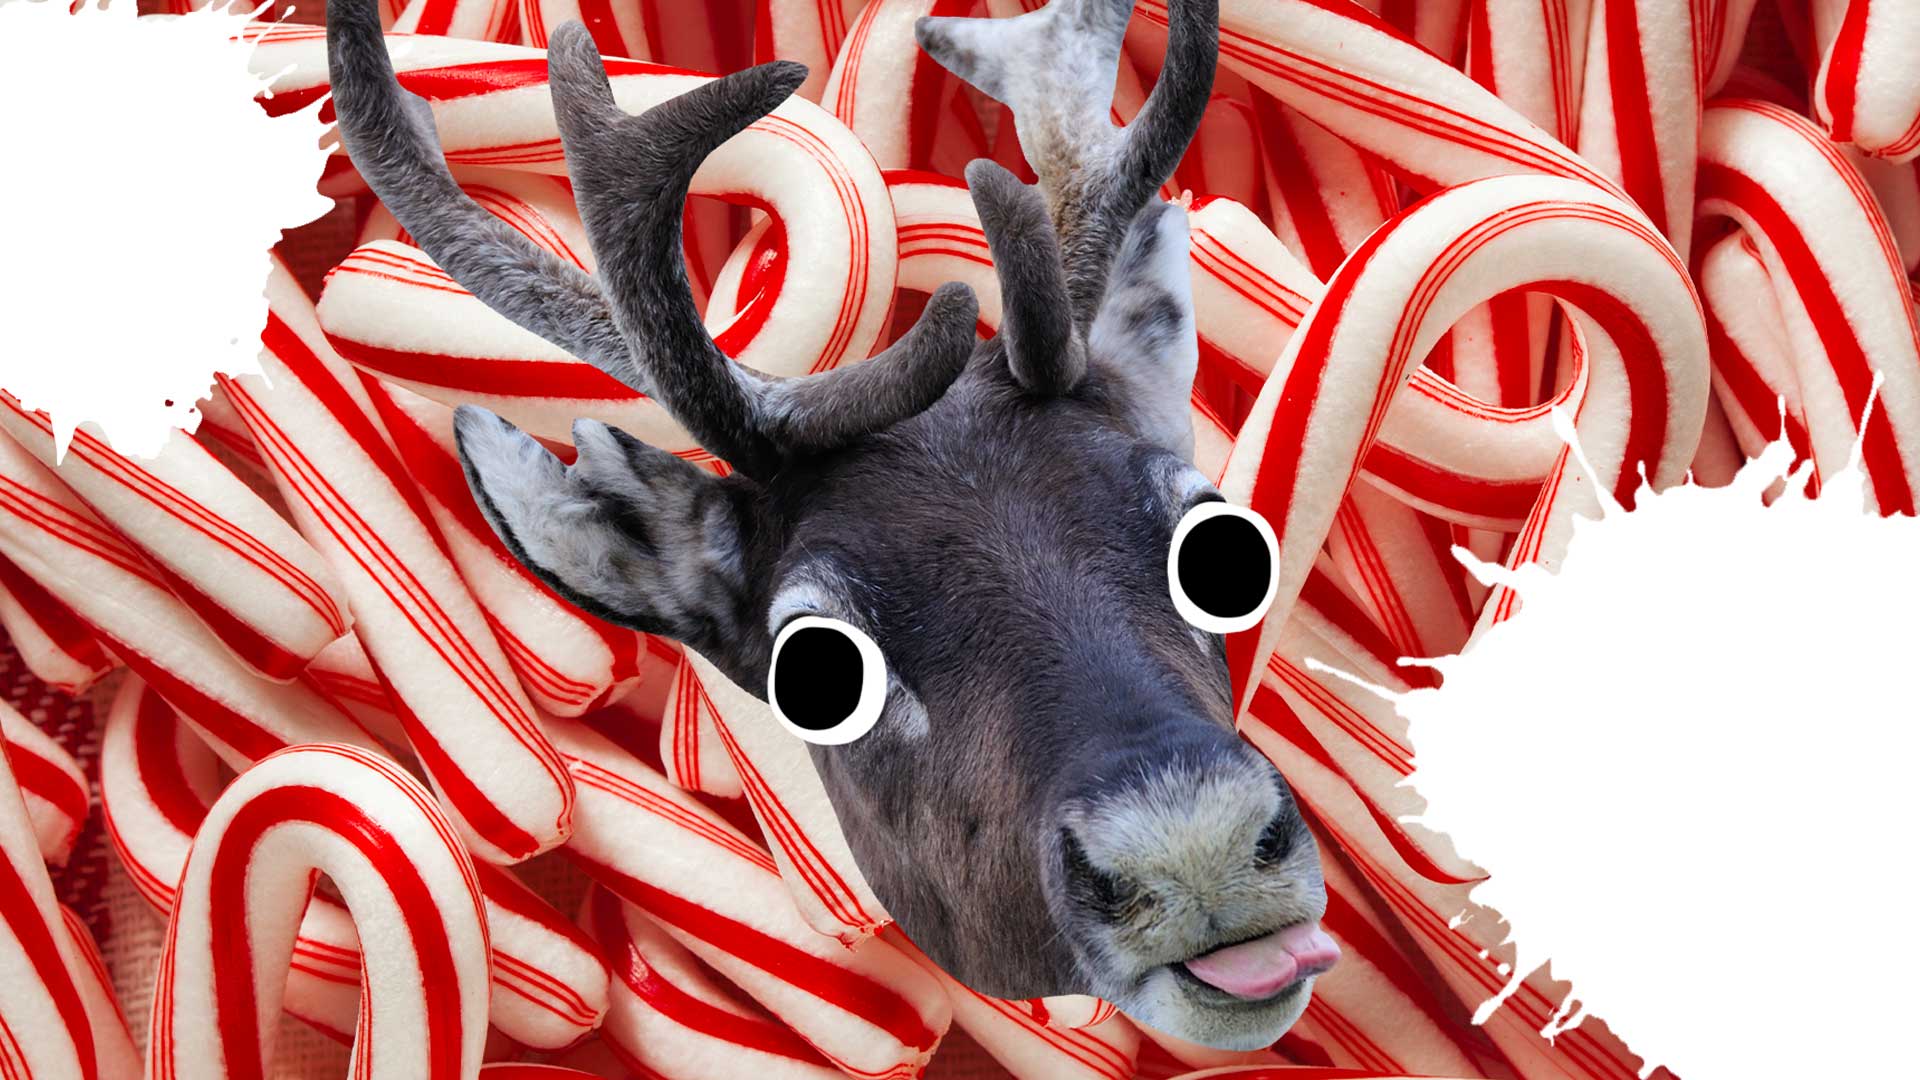 Reindeer and peppermint sticks